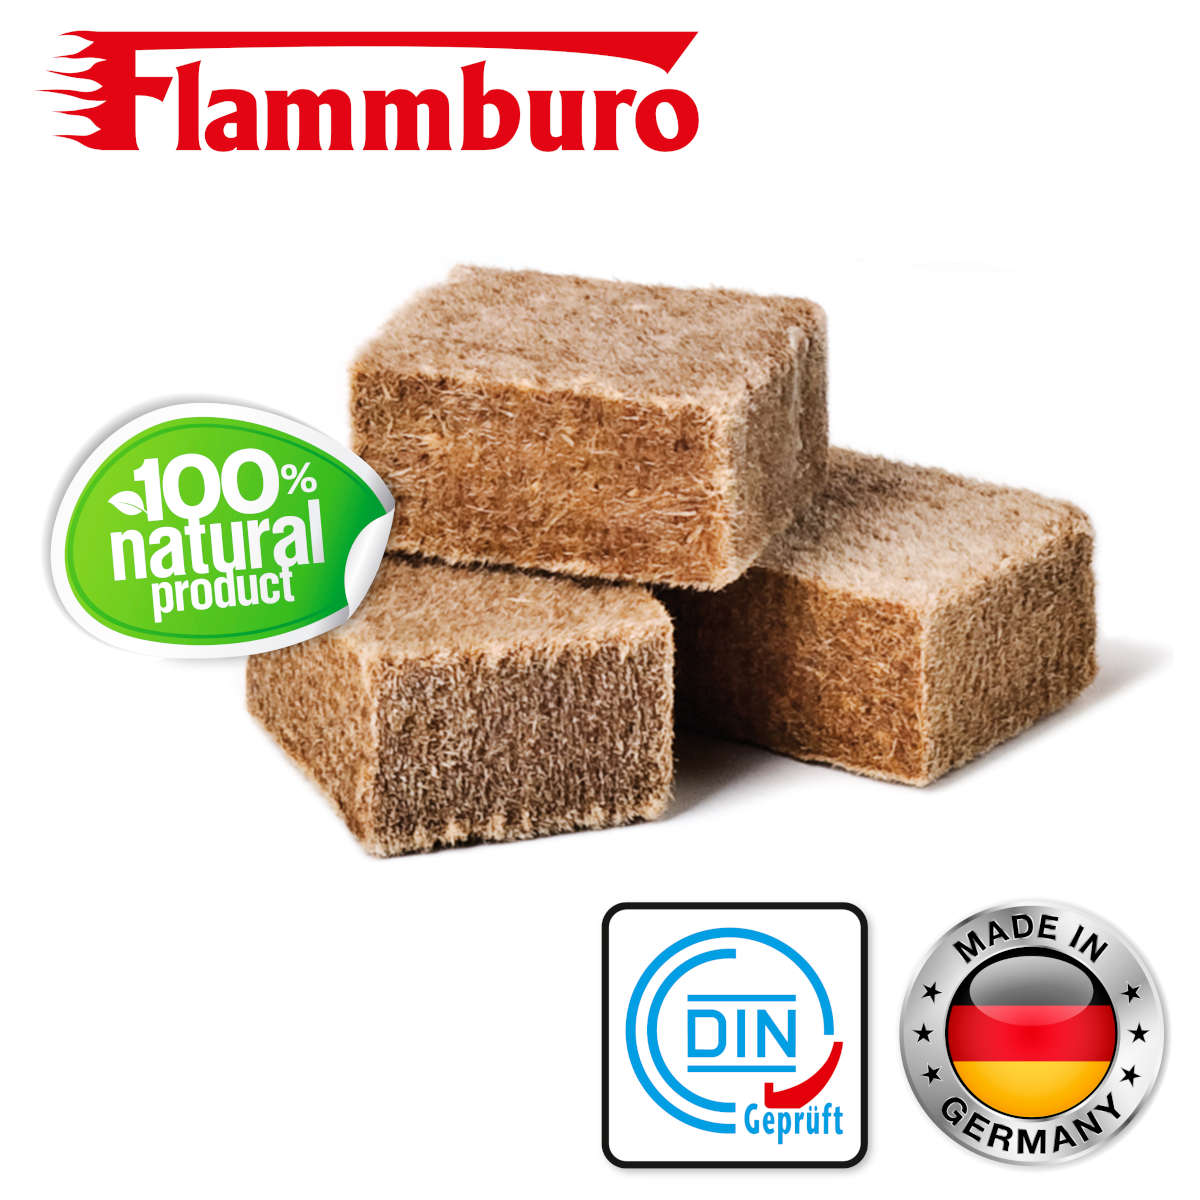 FLAMMBURO Anzündwürfel Kaminanzünder Grillanzünder Öko-Anzünder DIN und Made in Germany Logo 